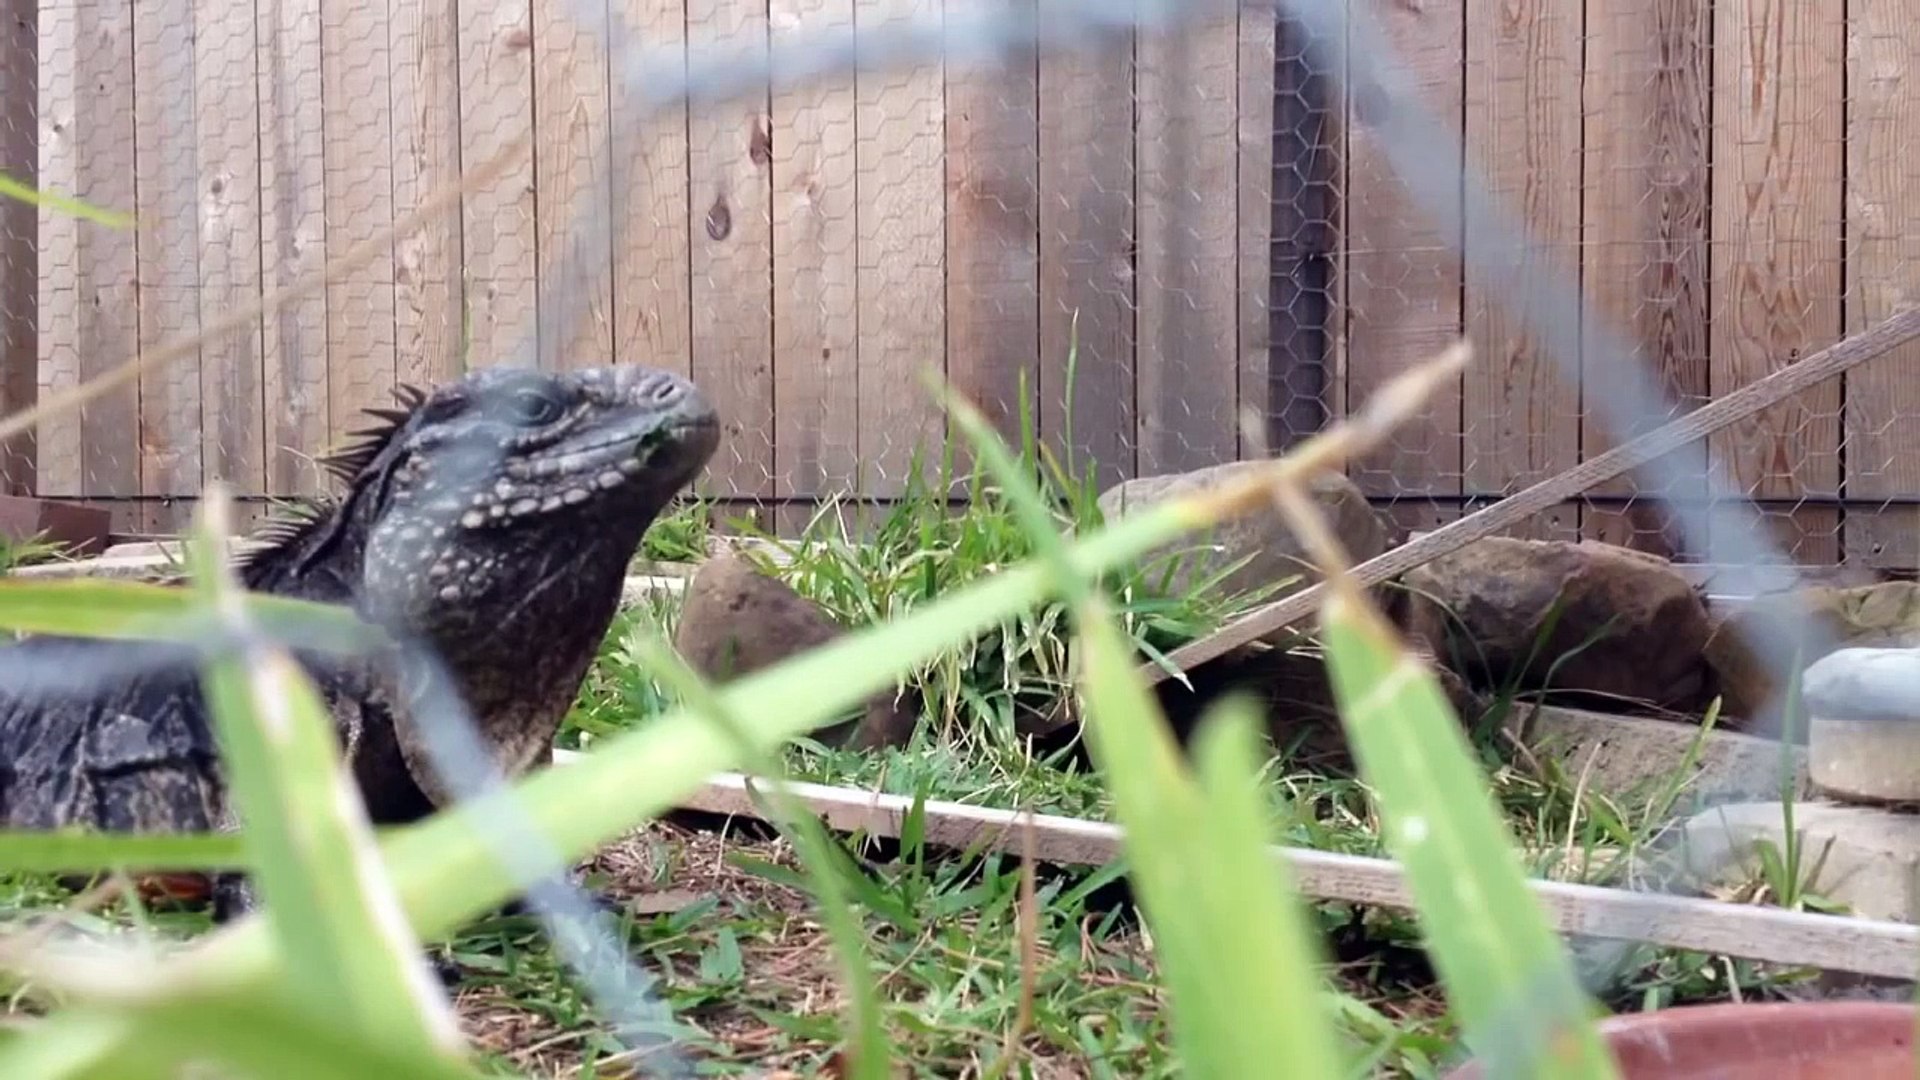 Unboxing Video: Female Rock Iguana